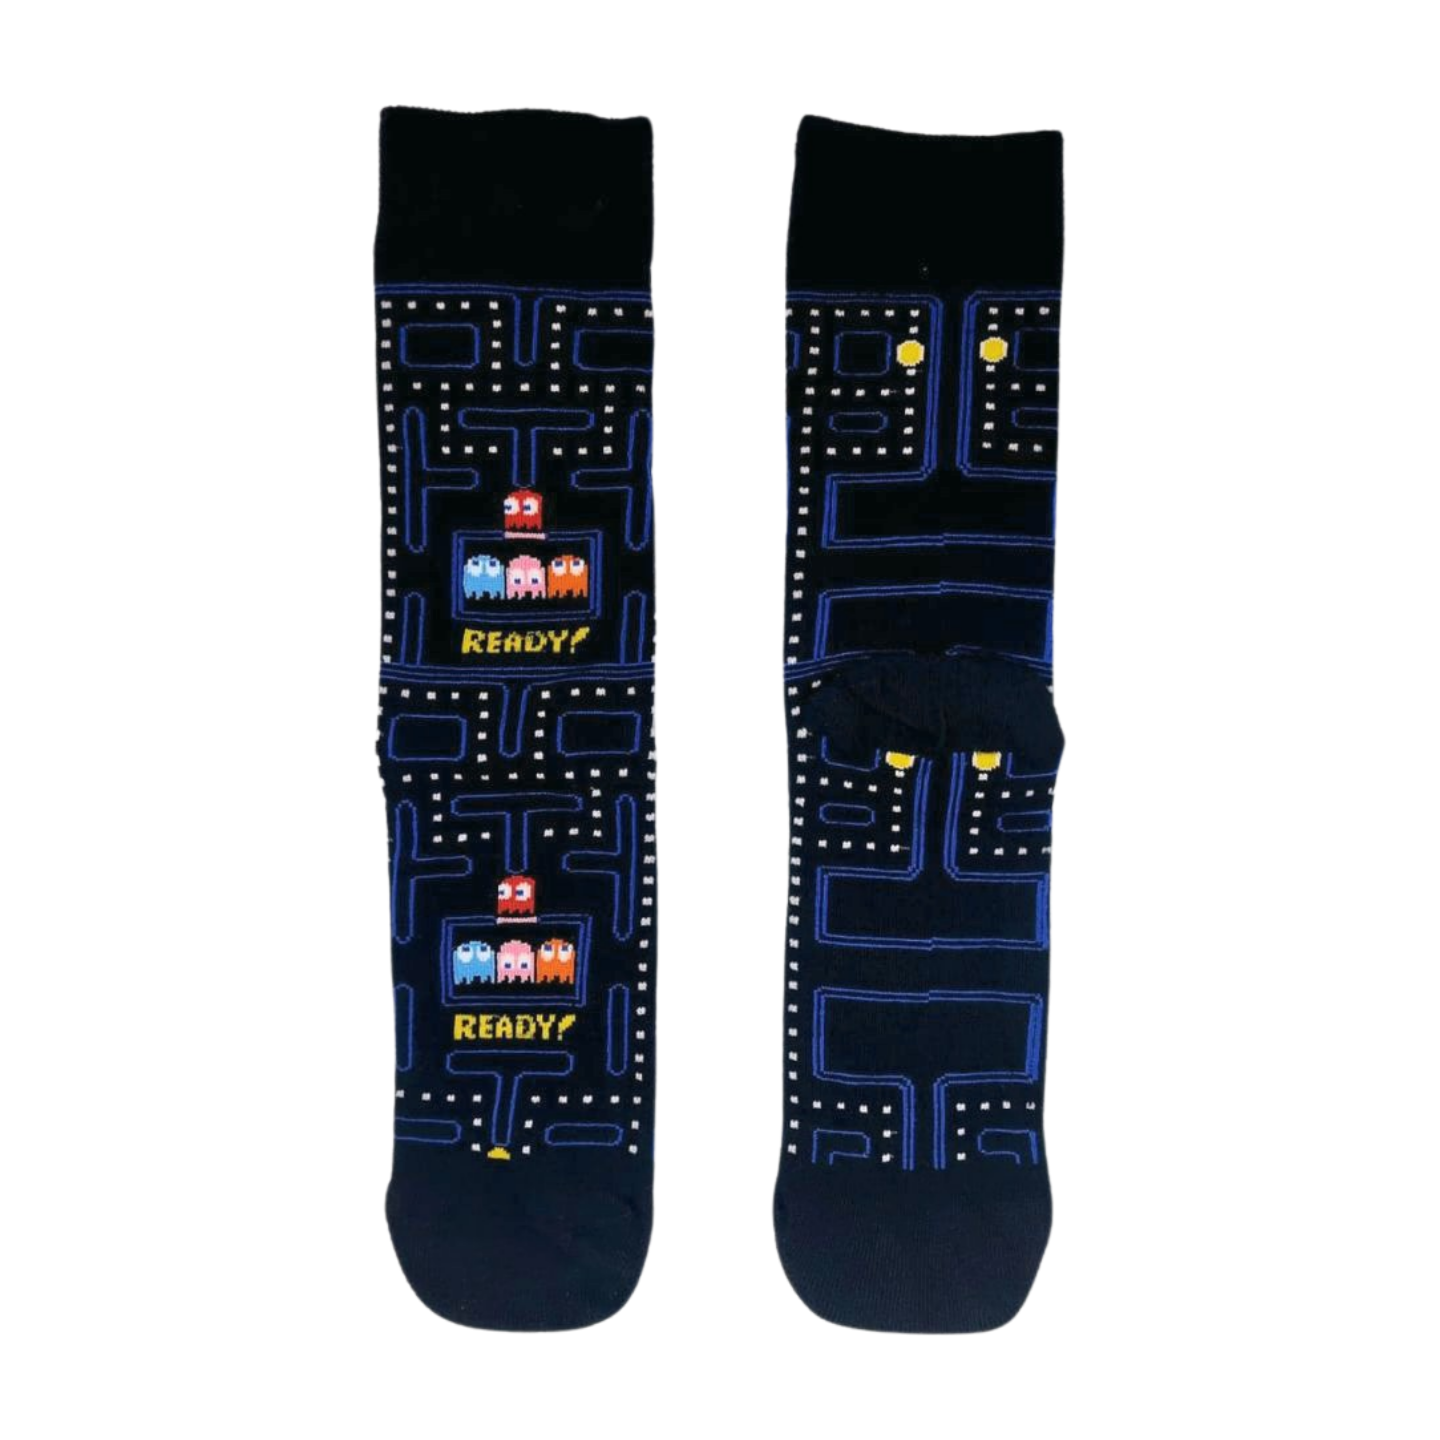 Pac-Man Arcade Game Design Socks